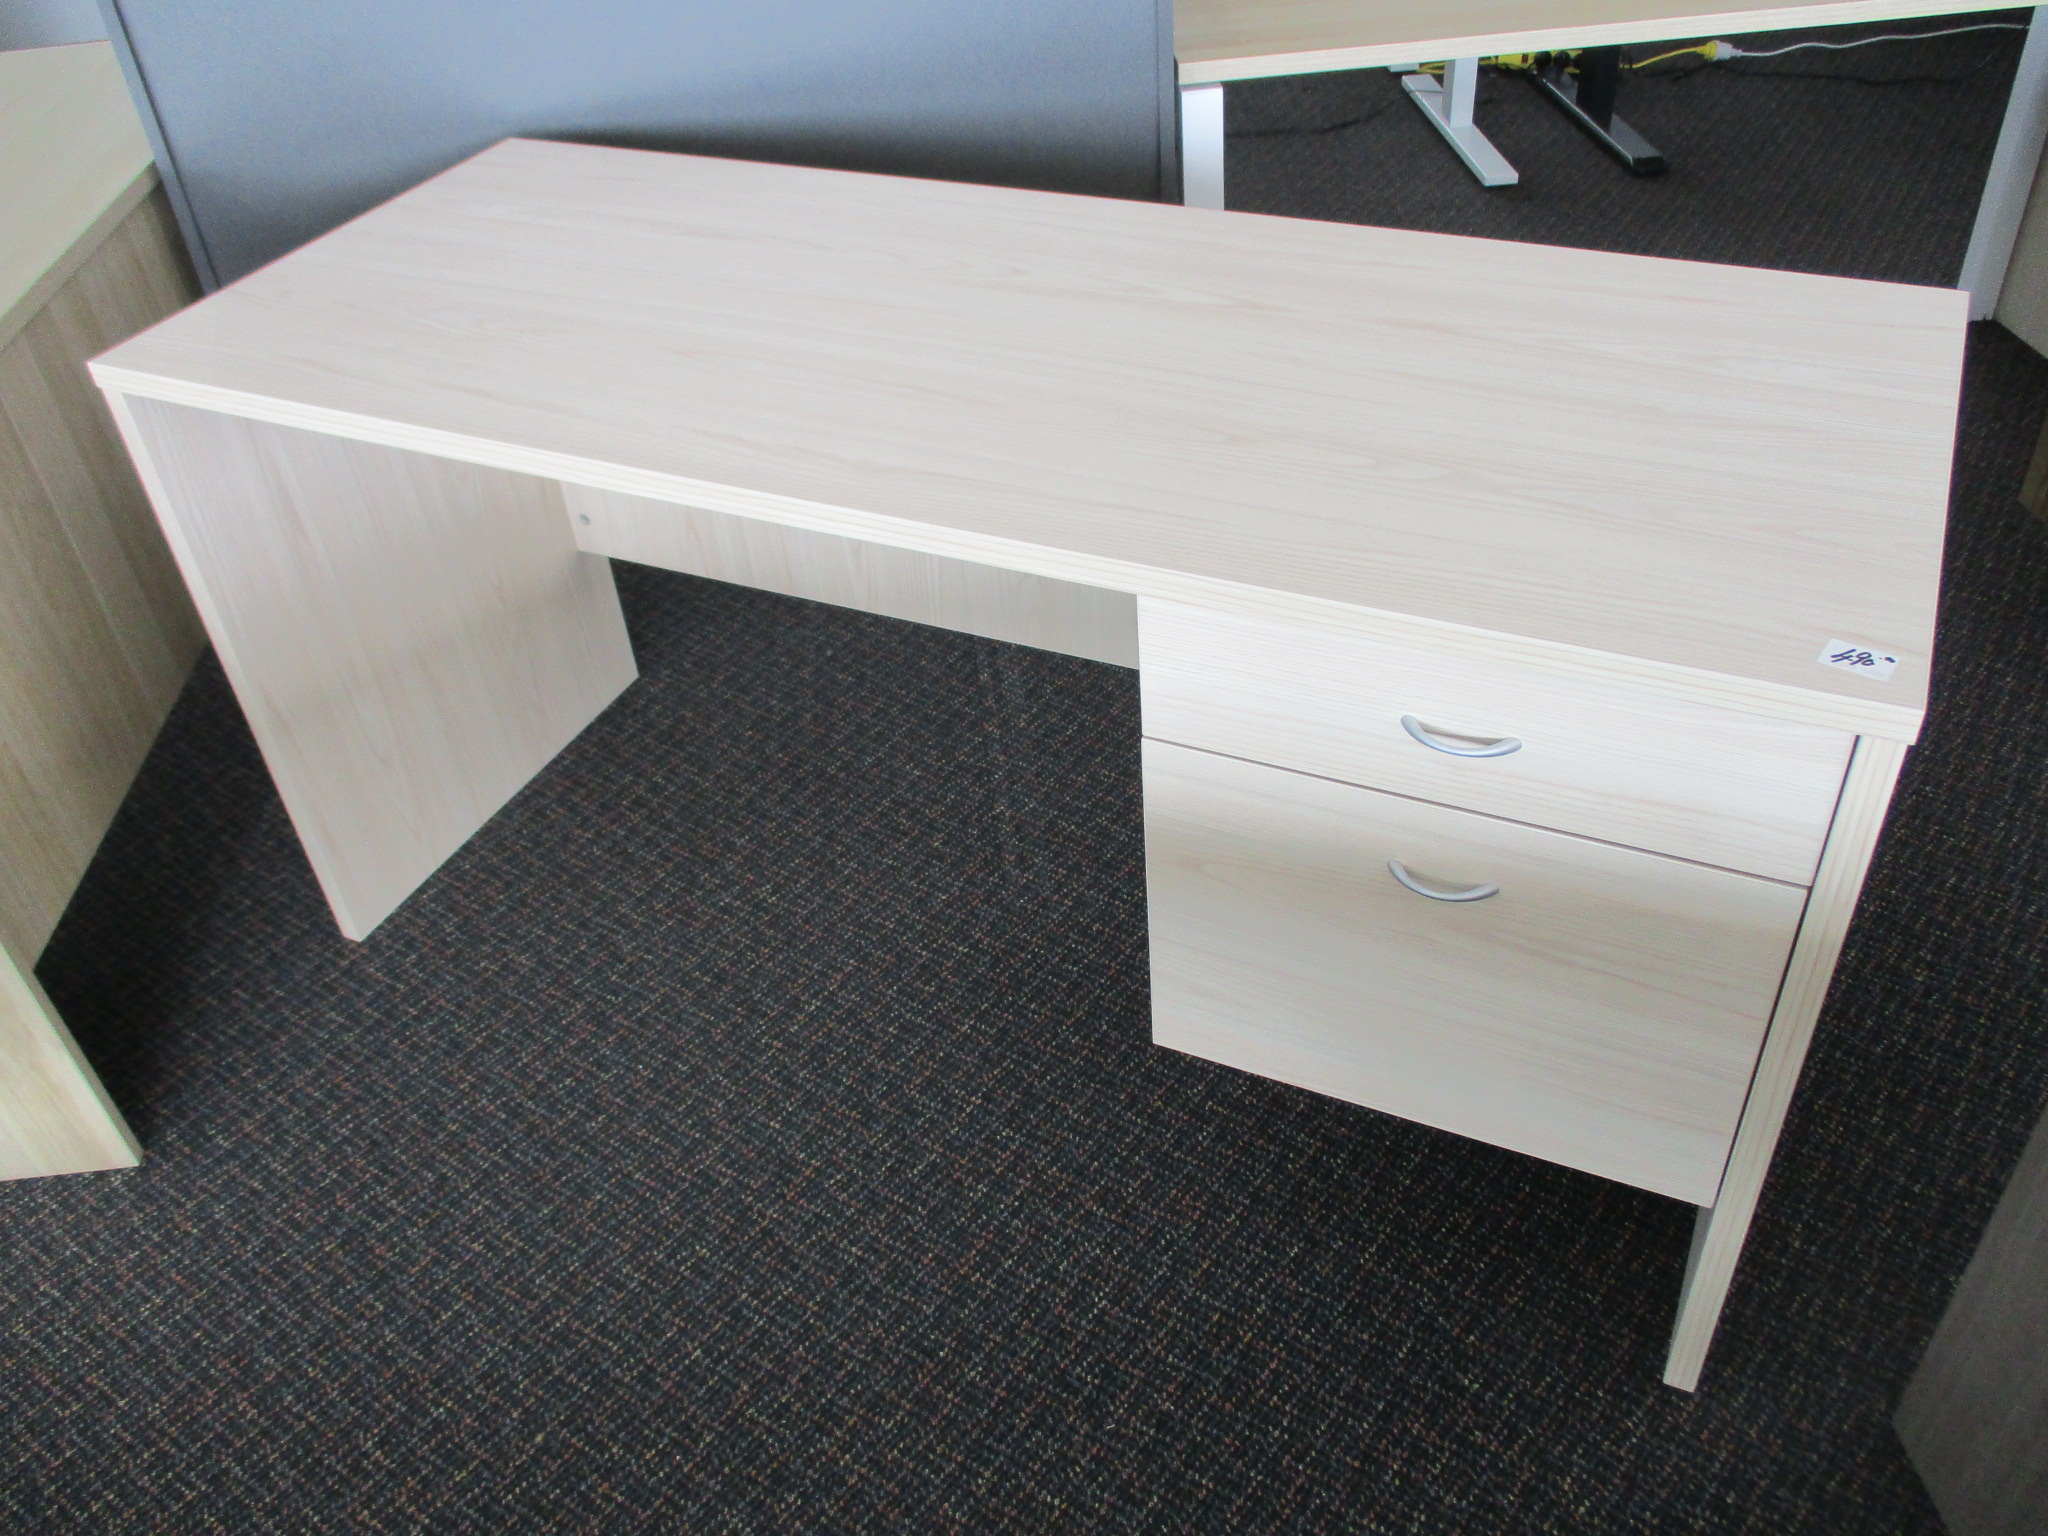 New Natural Milkwood Desk 1500×600 $490